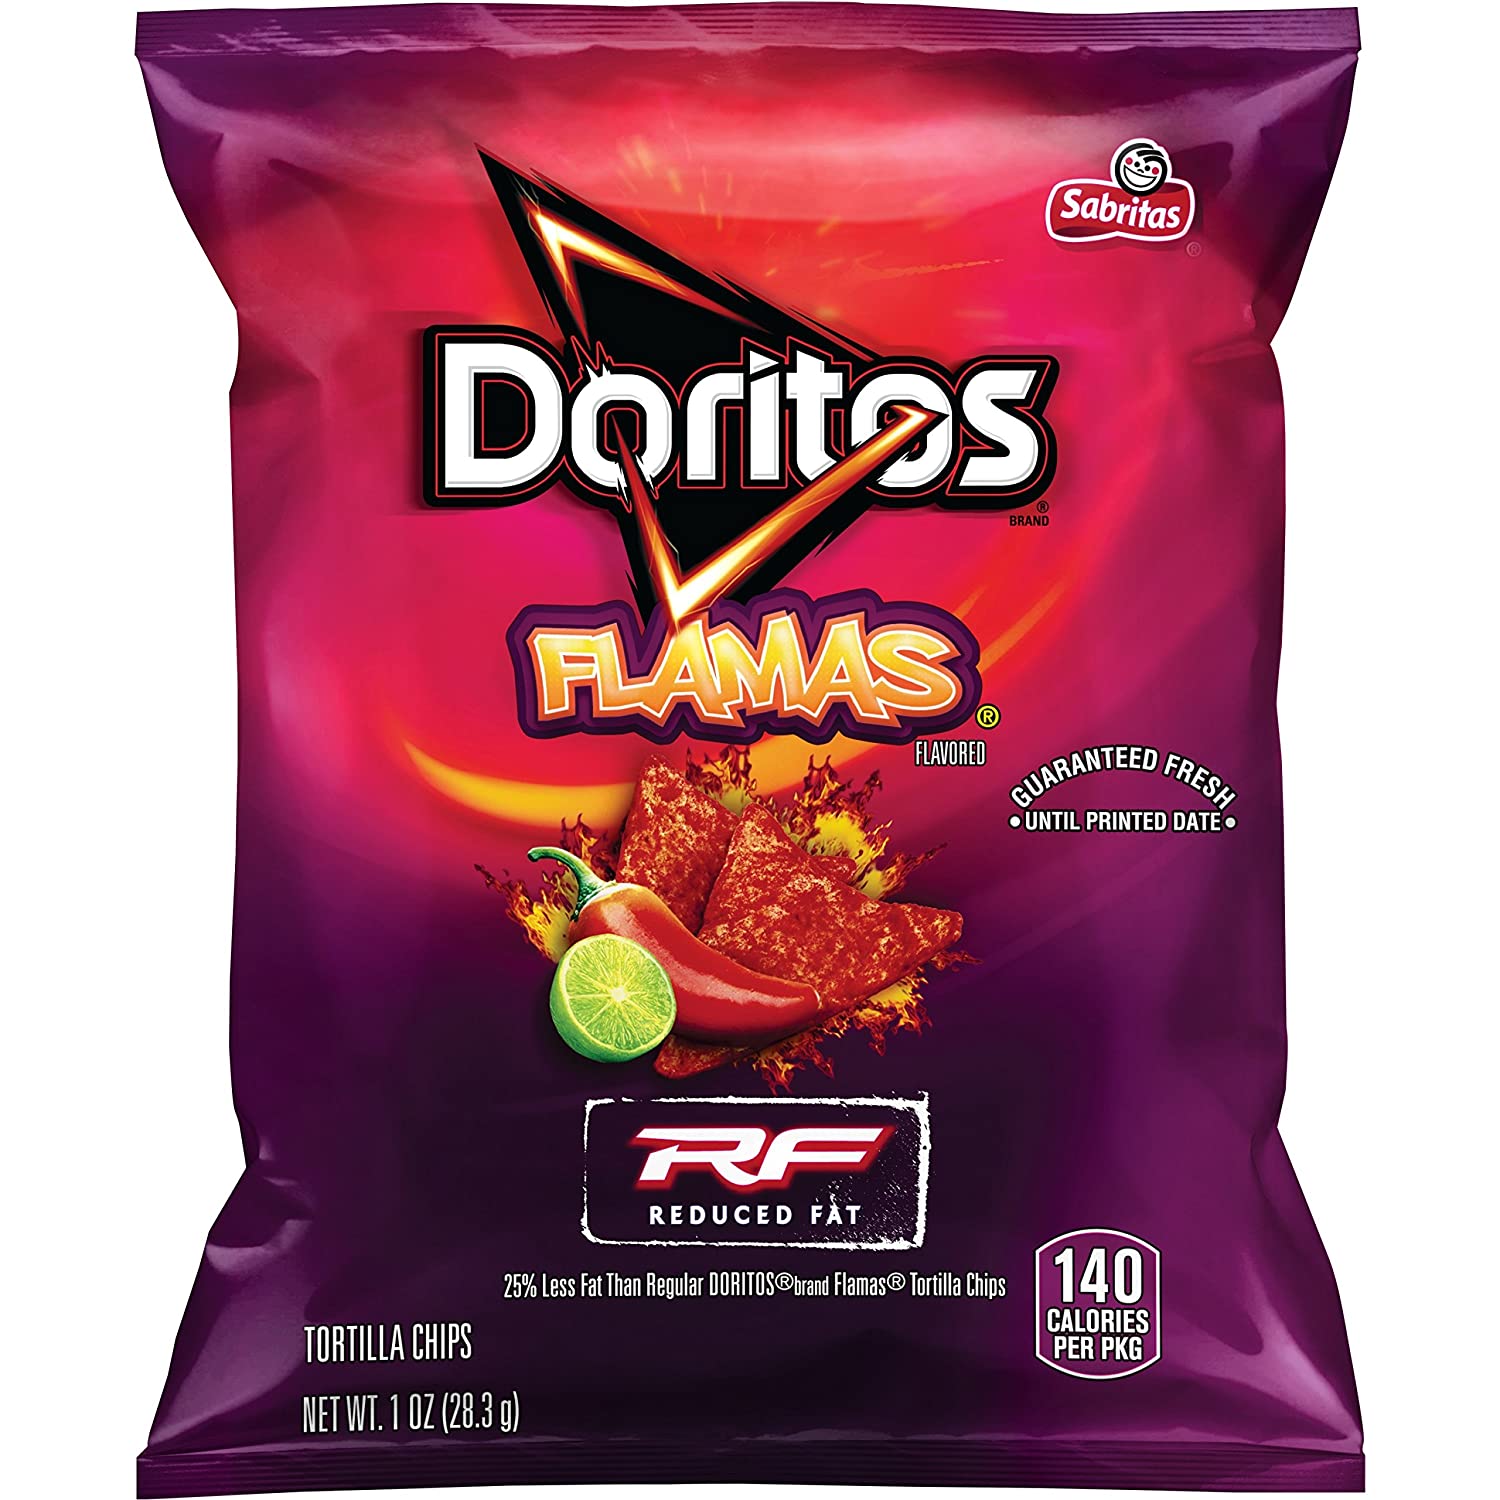 Doritos Flamas Reduced Fat - Pack of 10